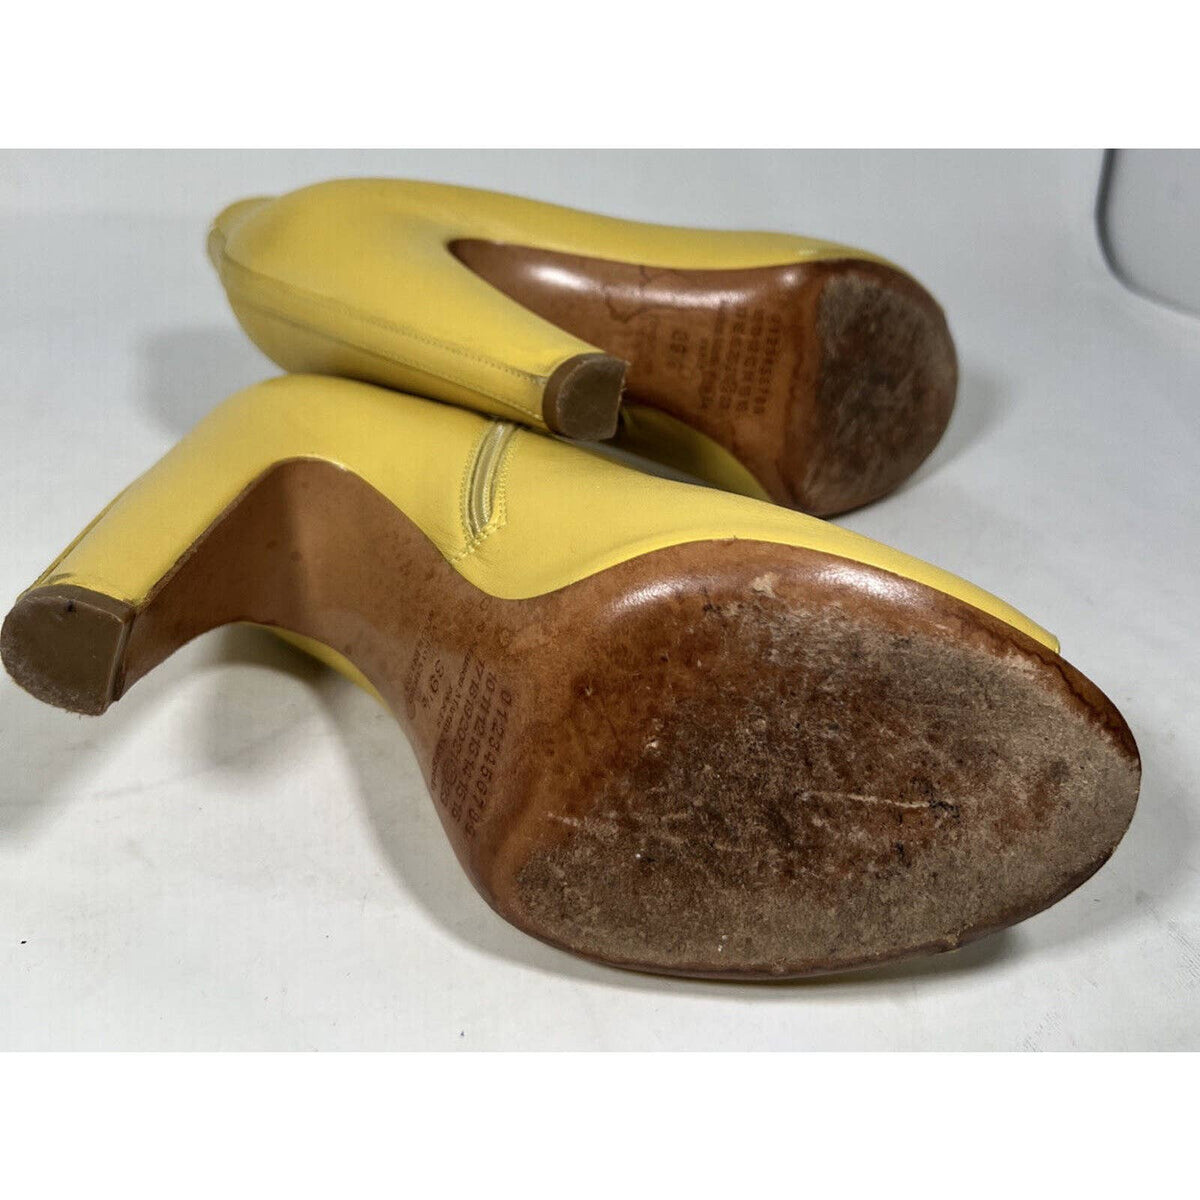 Maison Martin Margiela Yellow Leather Peep Toe Ankle Booties Sz.9.5(39.5)